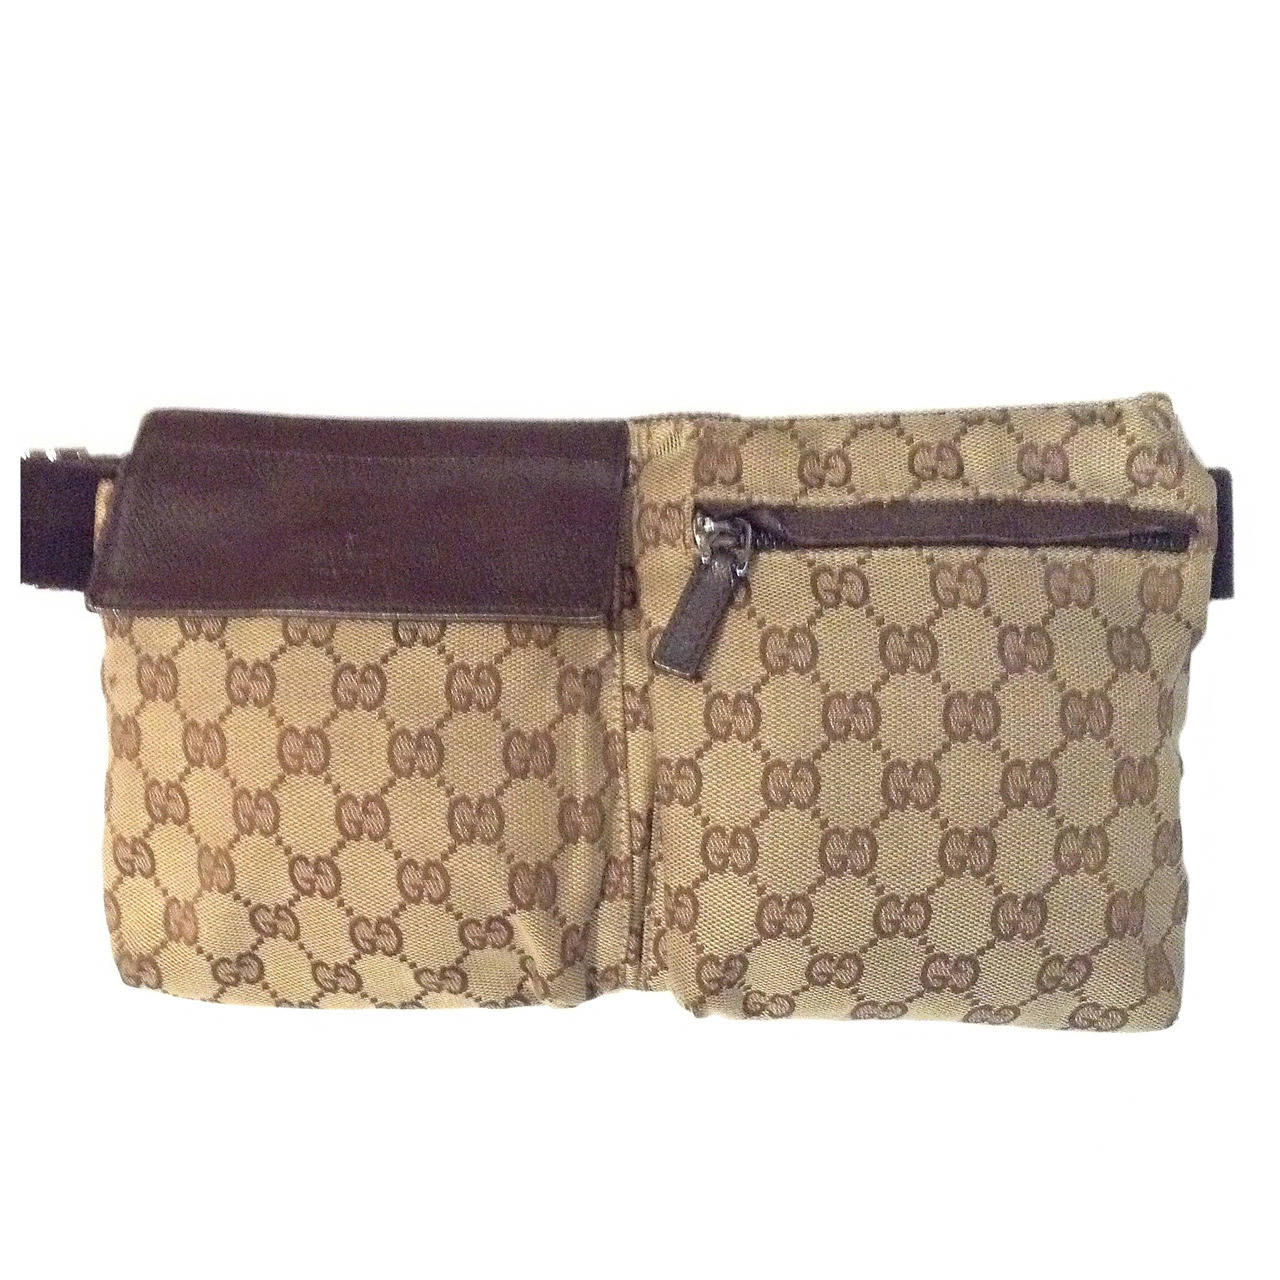 2013 Gucci Tan GG Monogram Belt Bag Retail $590 For Sale